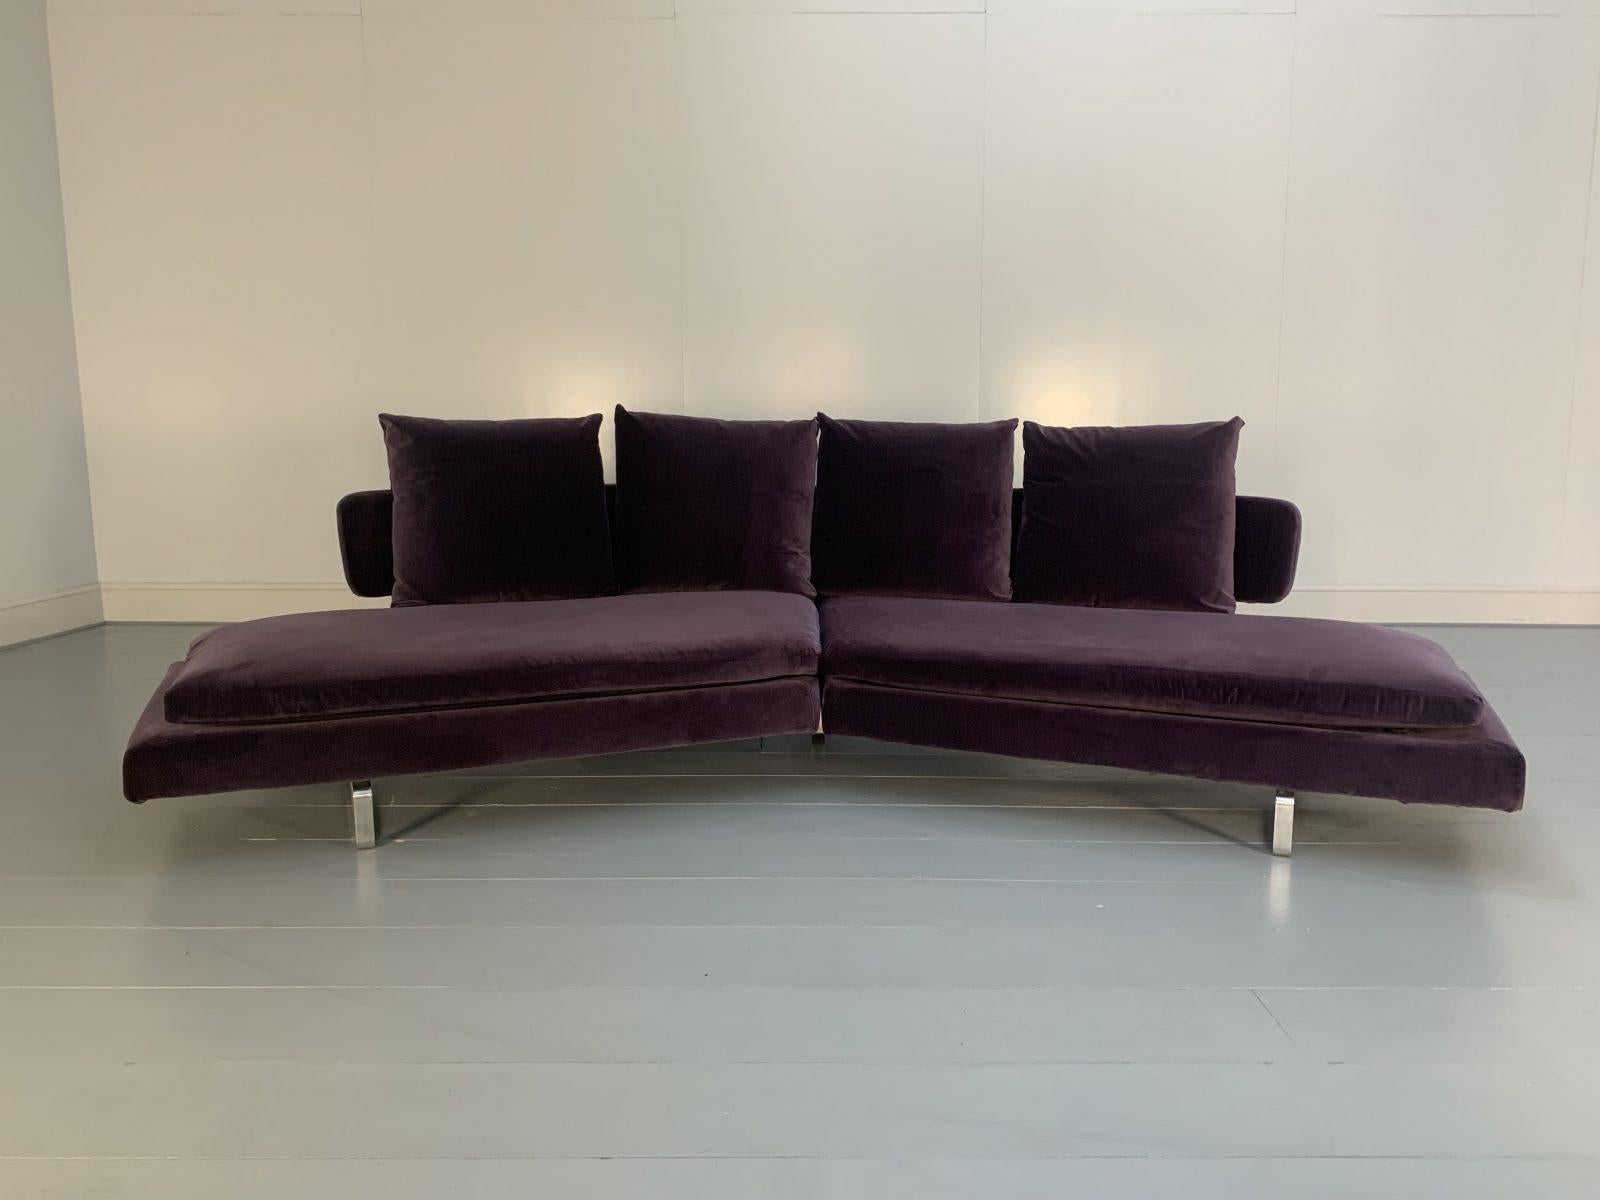 B&B Italia “Arne A252C_1” 4-Seat Curved Sofa in Purple Velvet For Sale 2